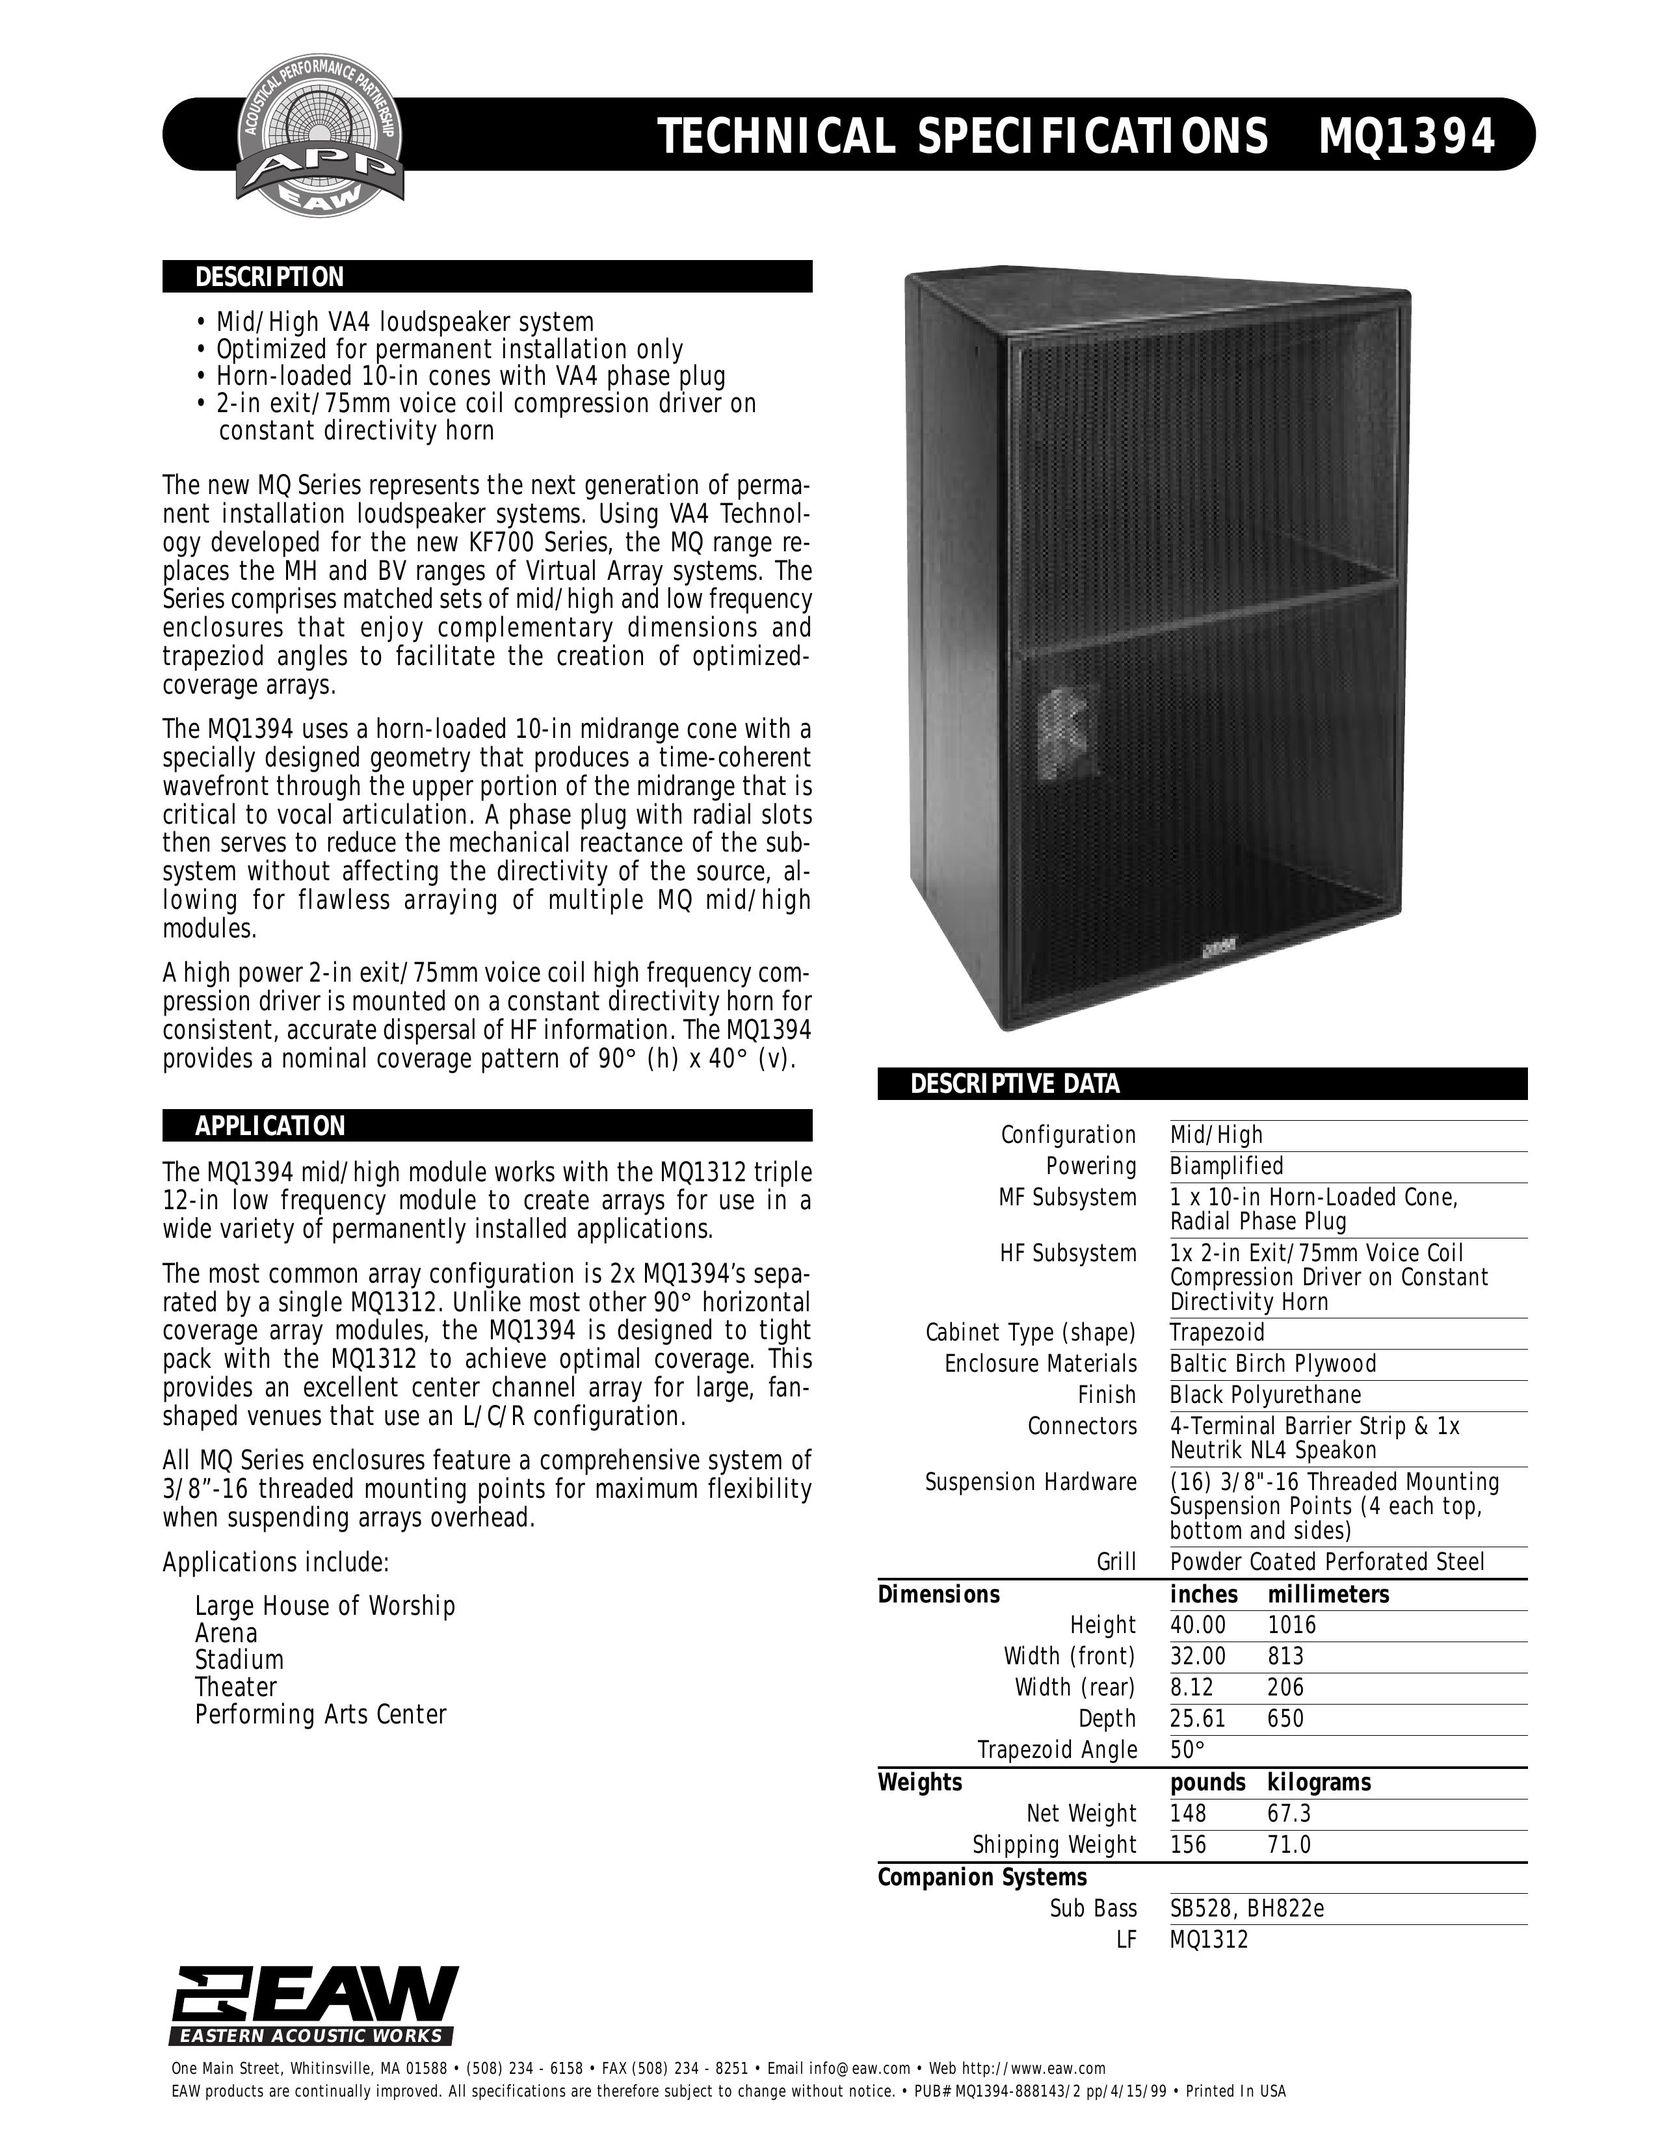 EAW MQ1394 Speaker System User Manual